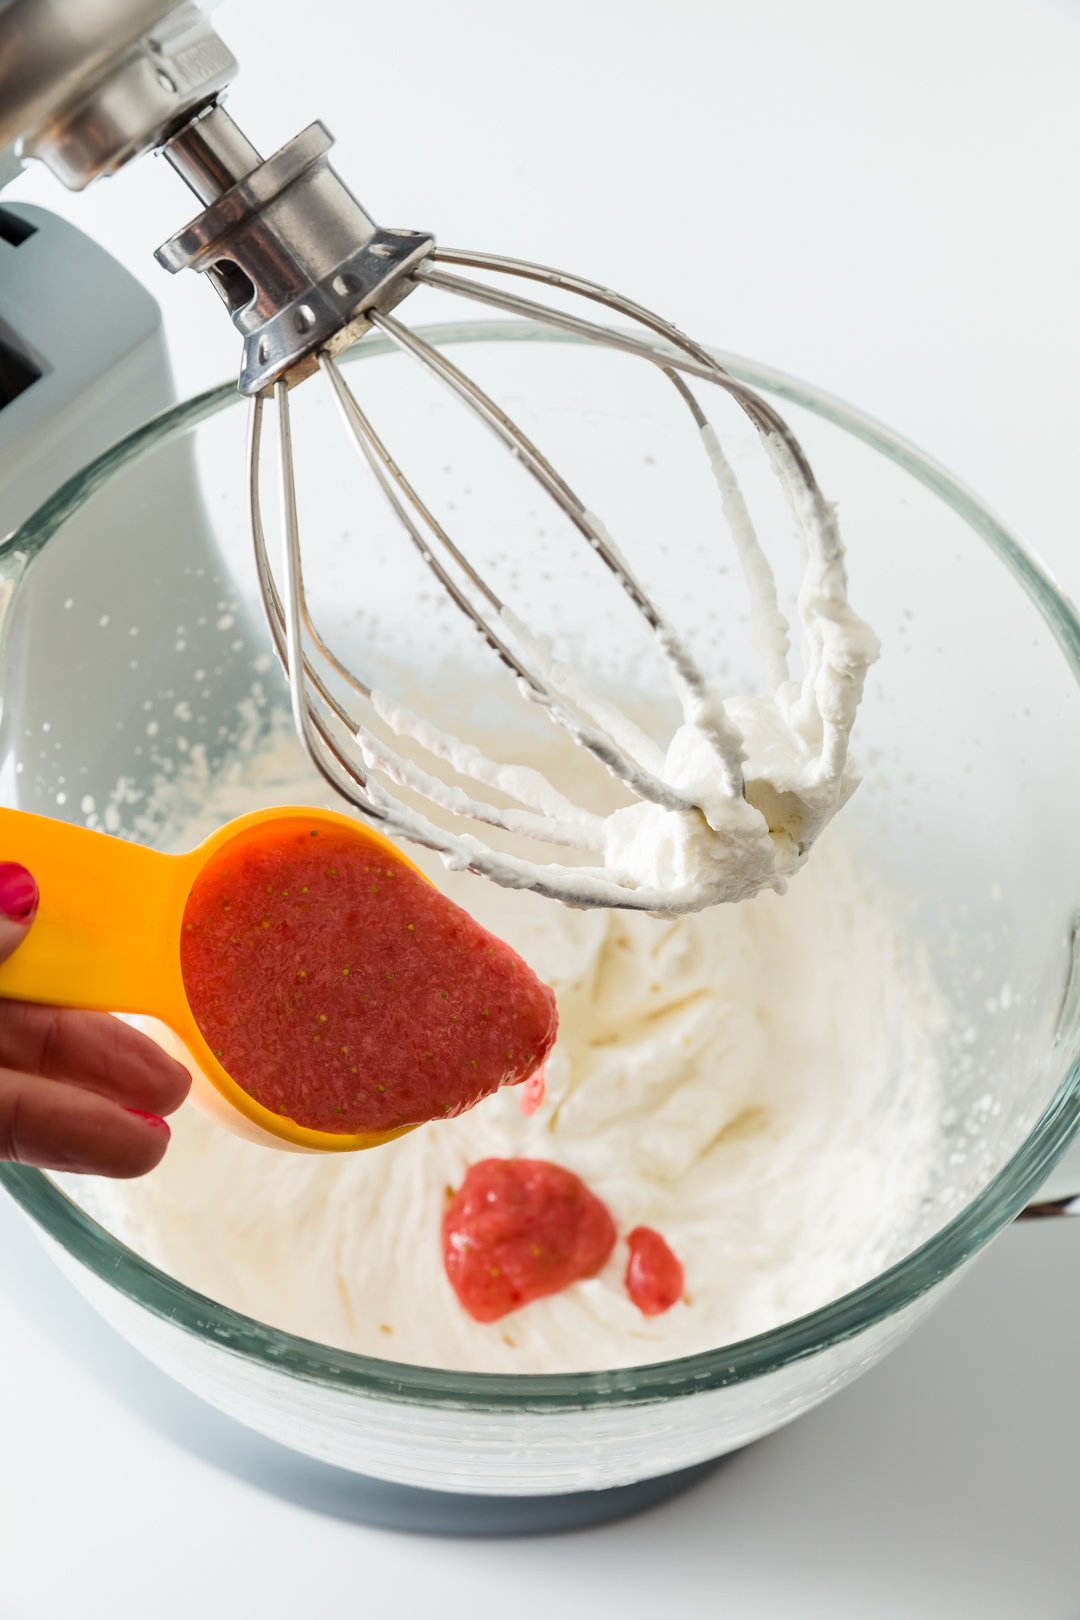 Adding strawberry liquid to whipped cream